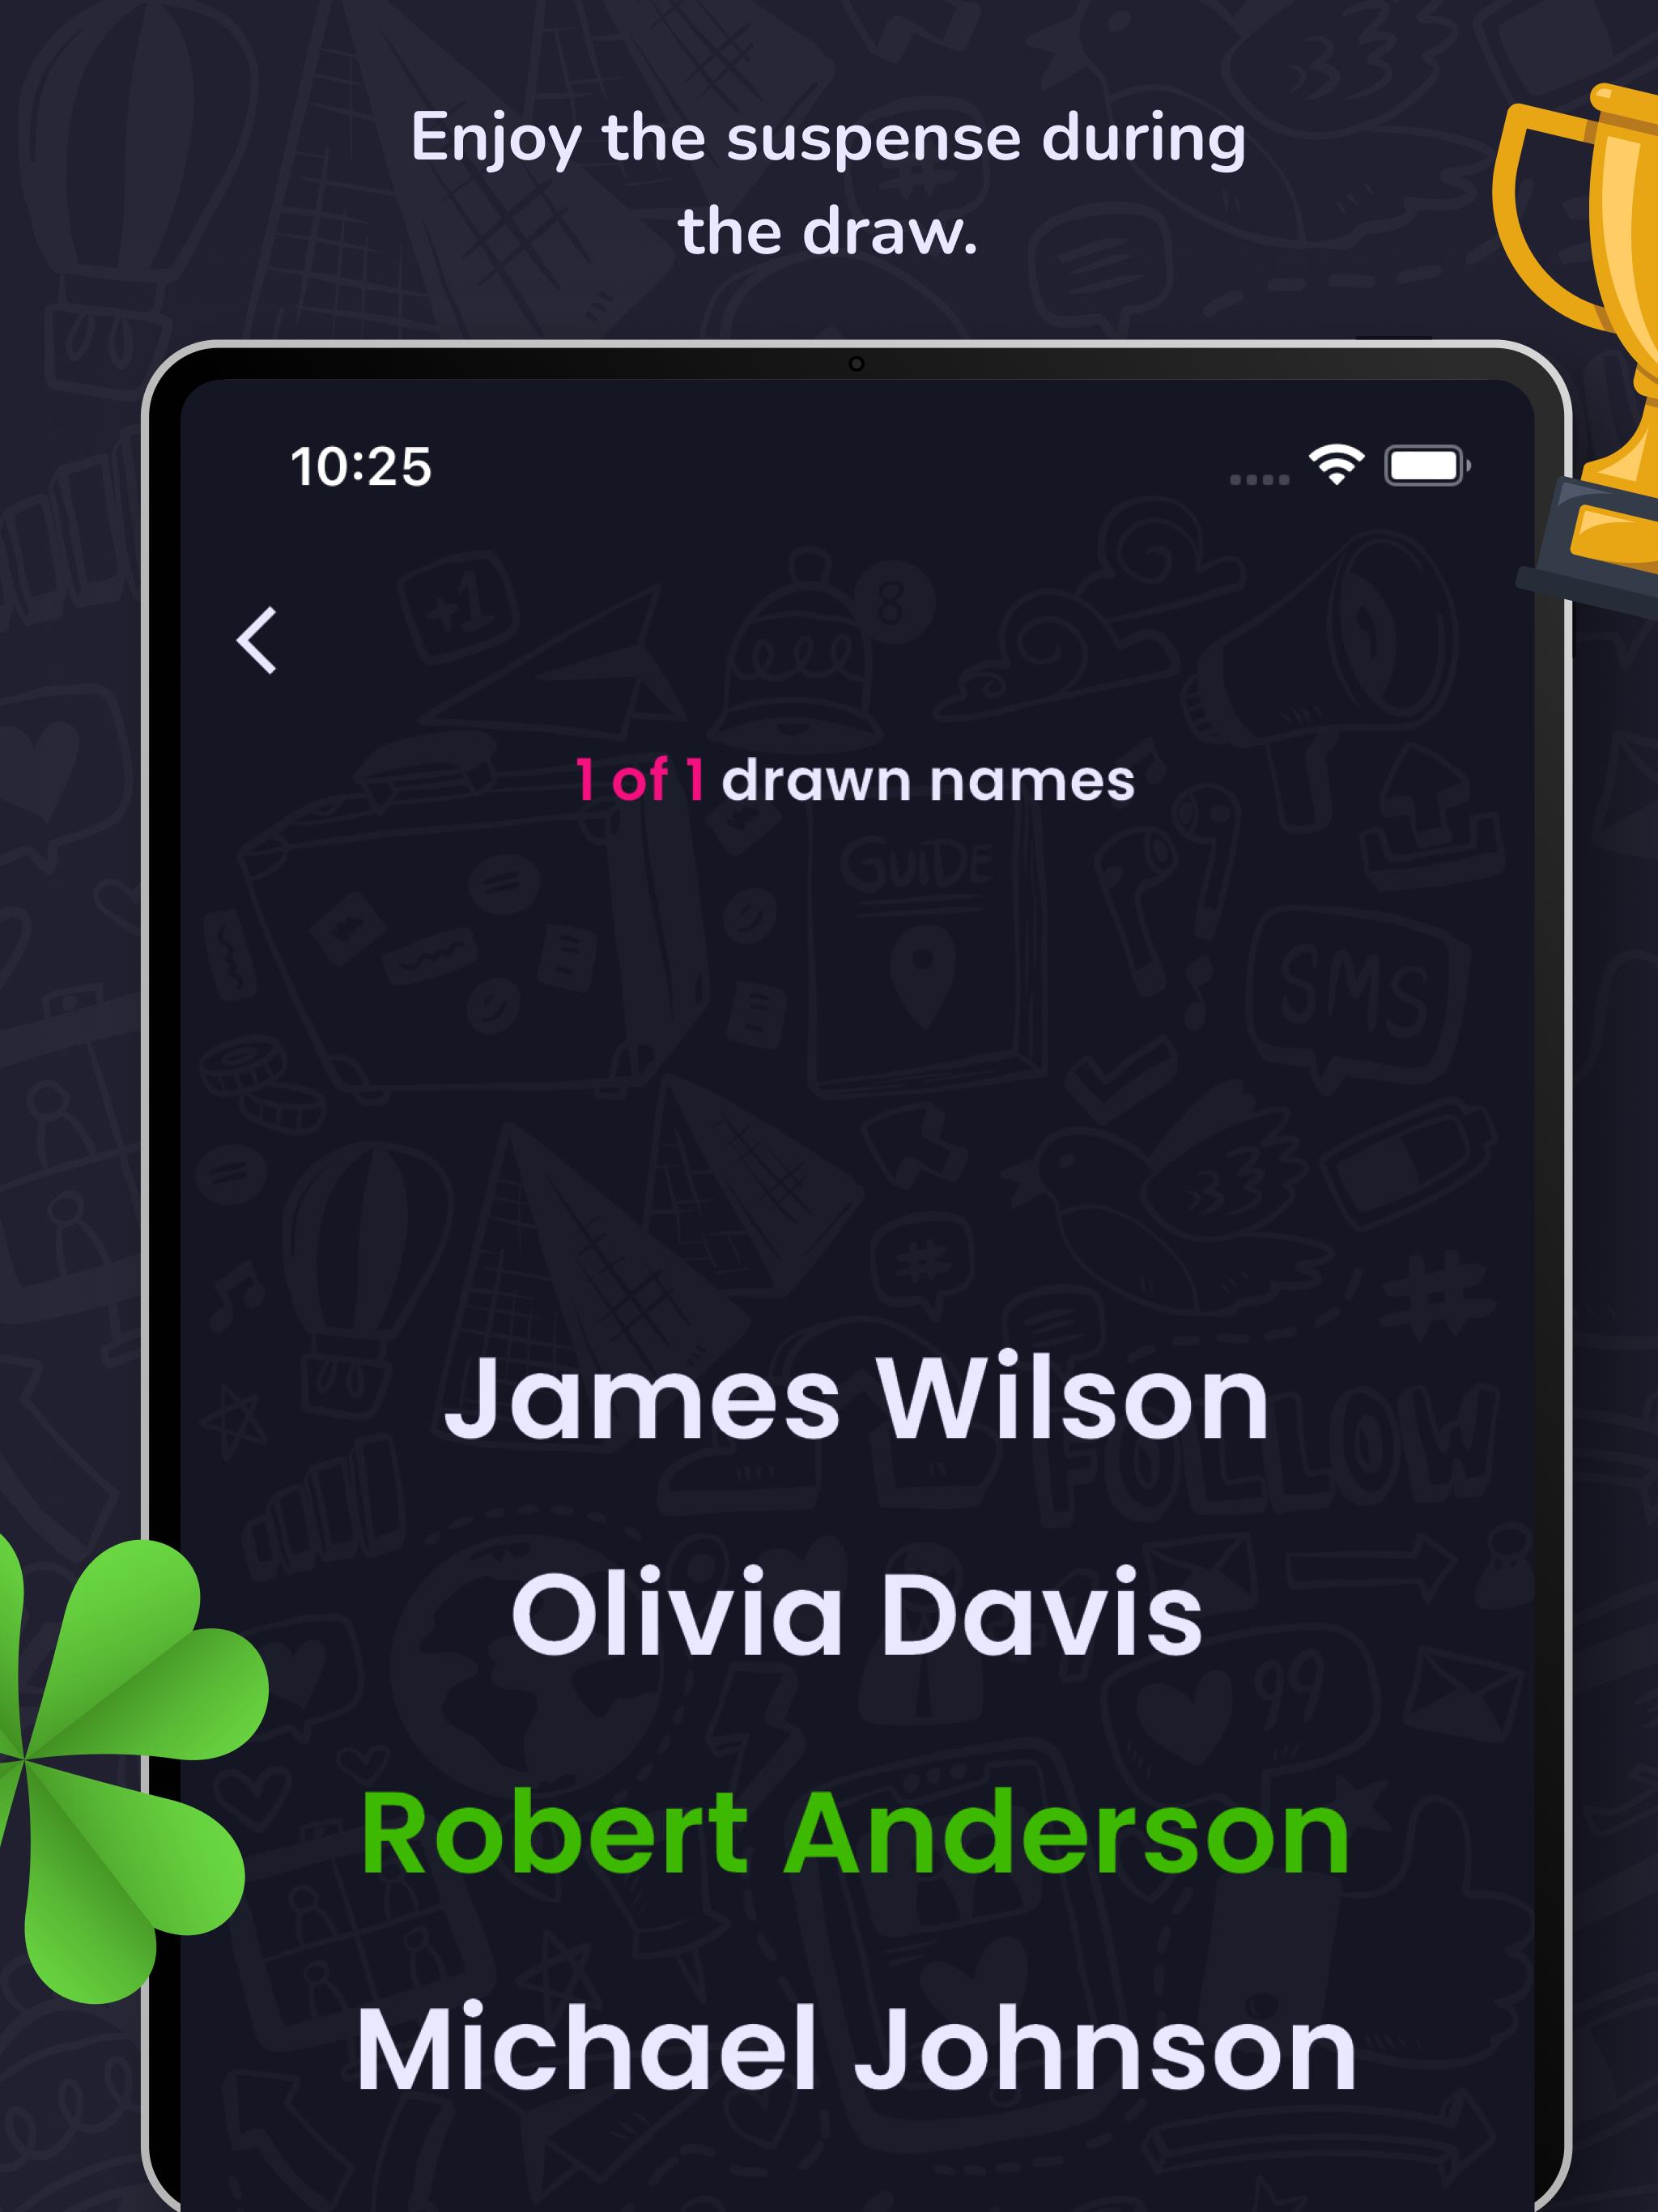 Random name picker for raffles Screenshot 8